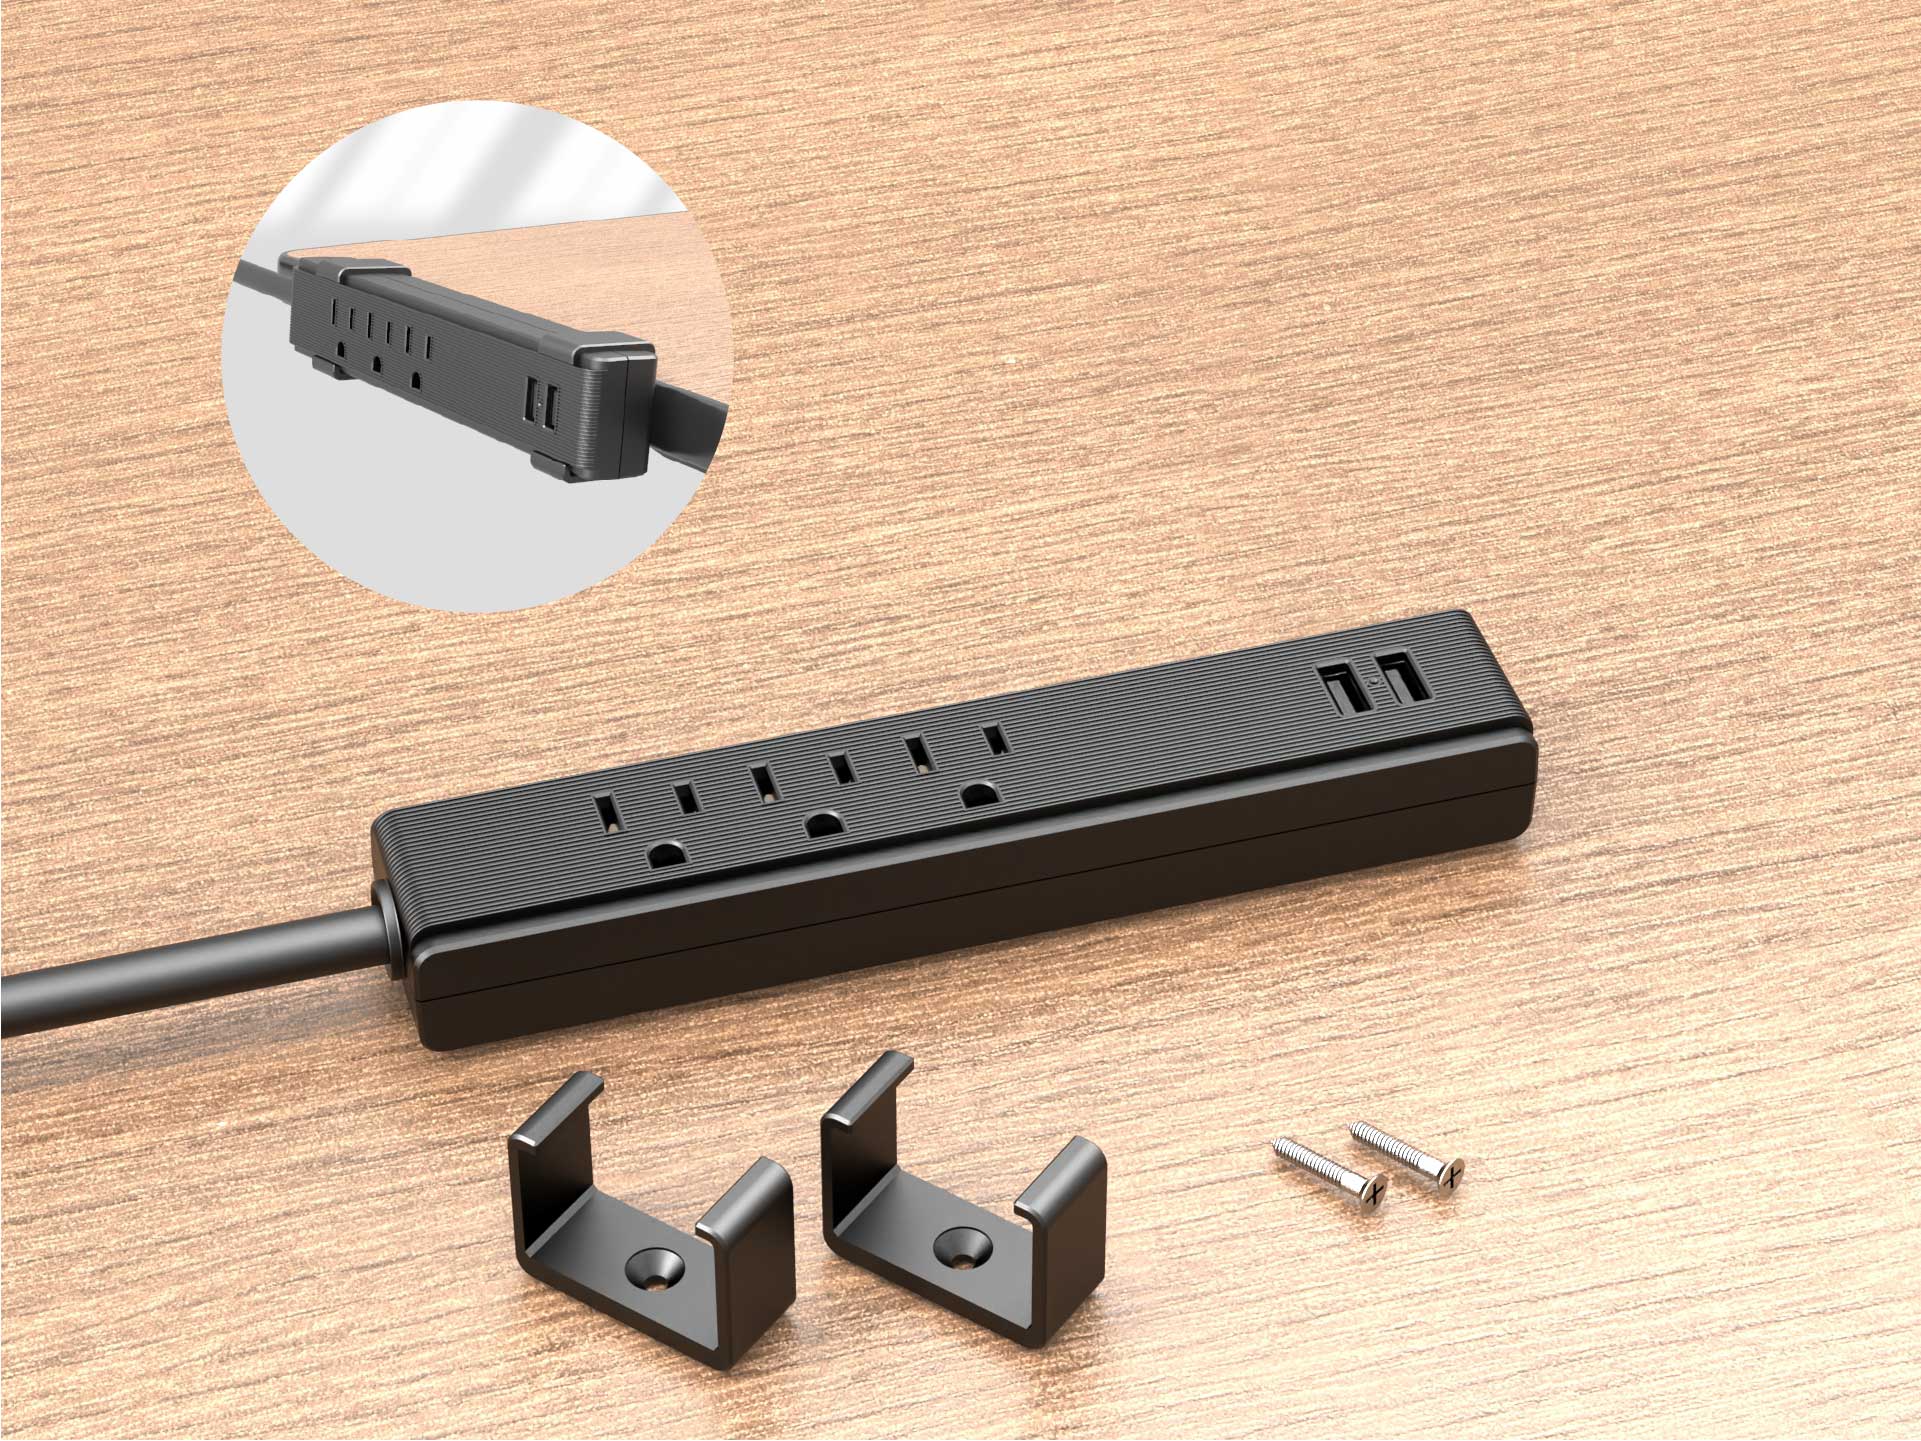 2 PCS Power Strip Desk Clamp with USB Charging Ports Desktop Edge Mount Outlets 